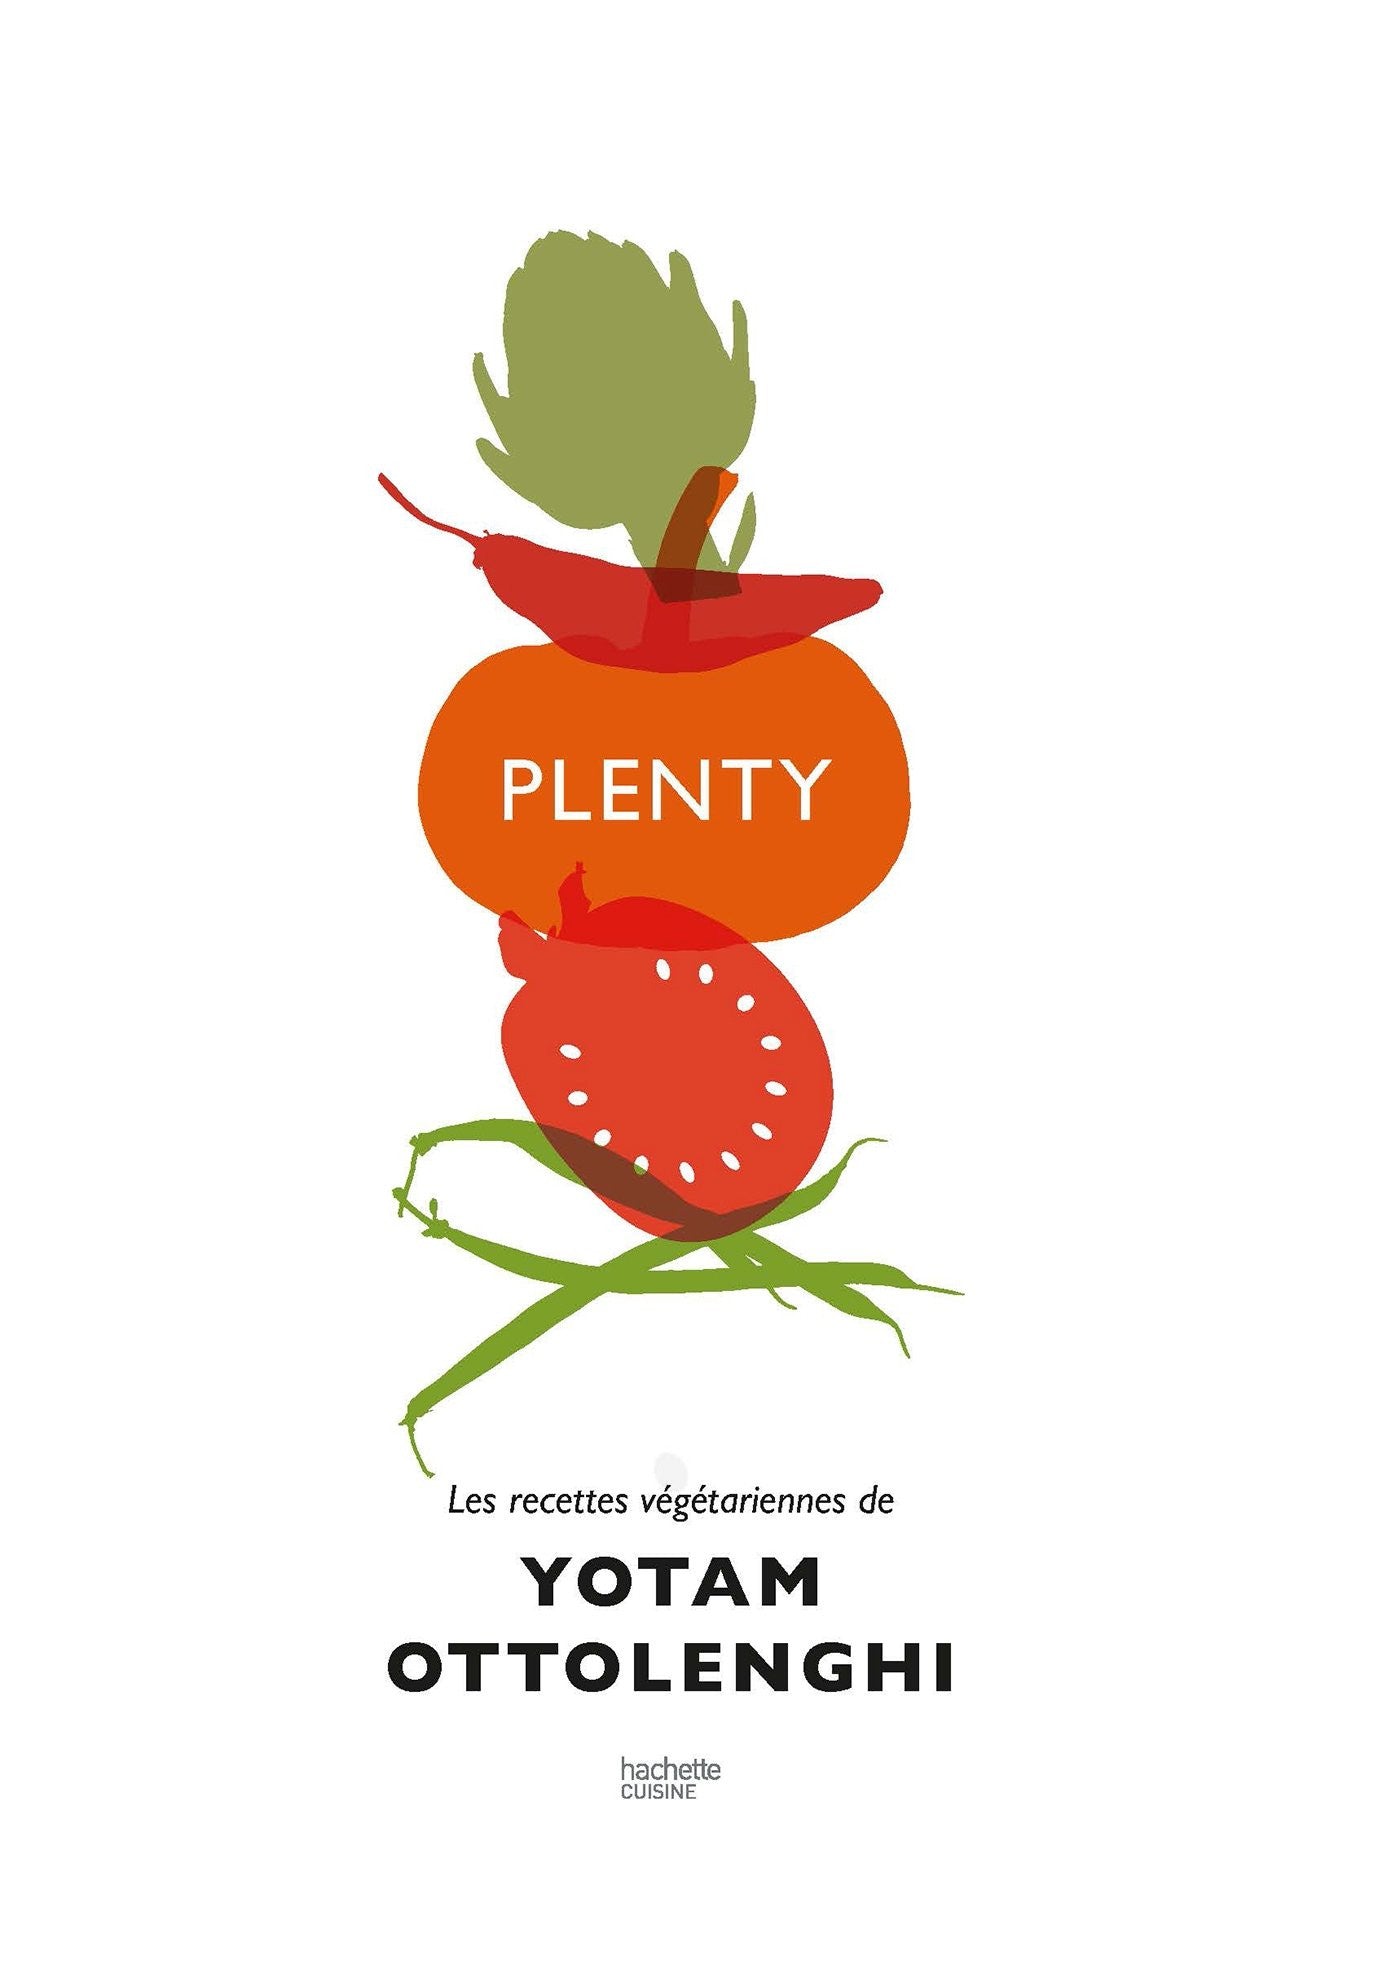 Plenty (français) - Yotam Ottolenghi